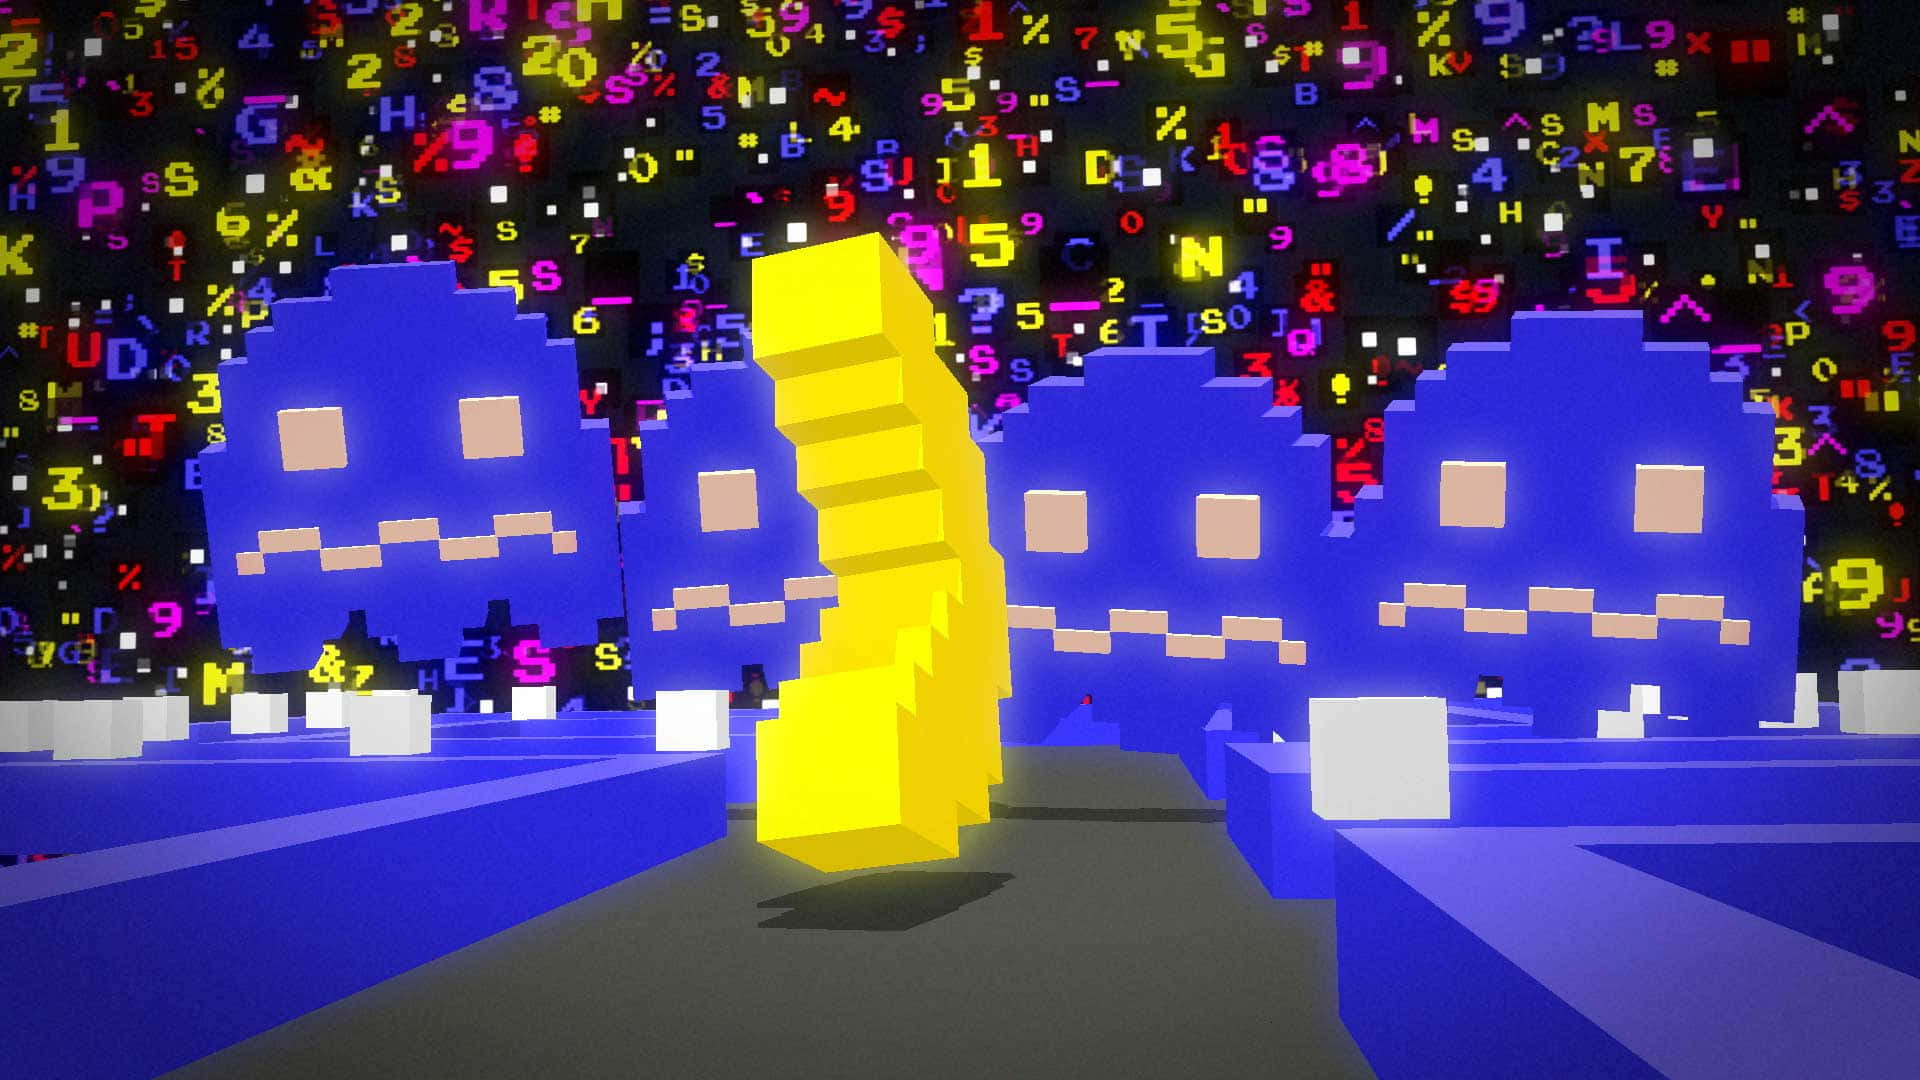 Classic Pac-Man arcade game on a dark maze background.